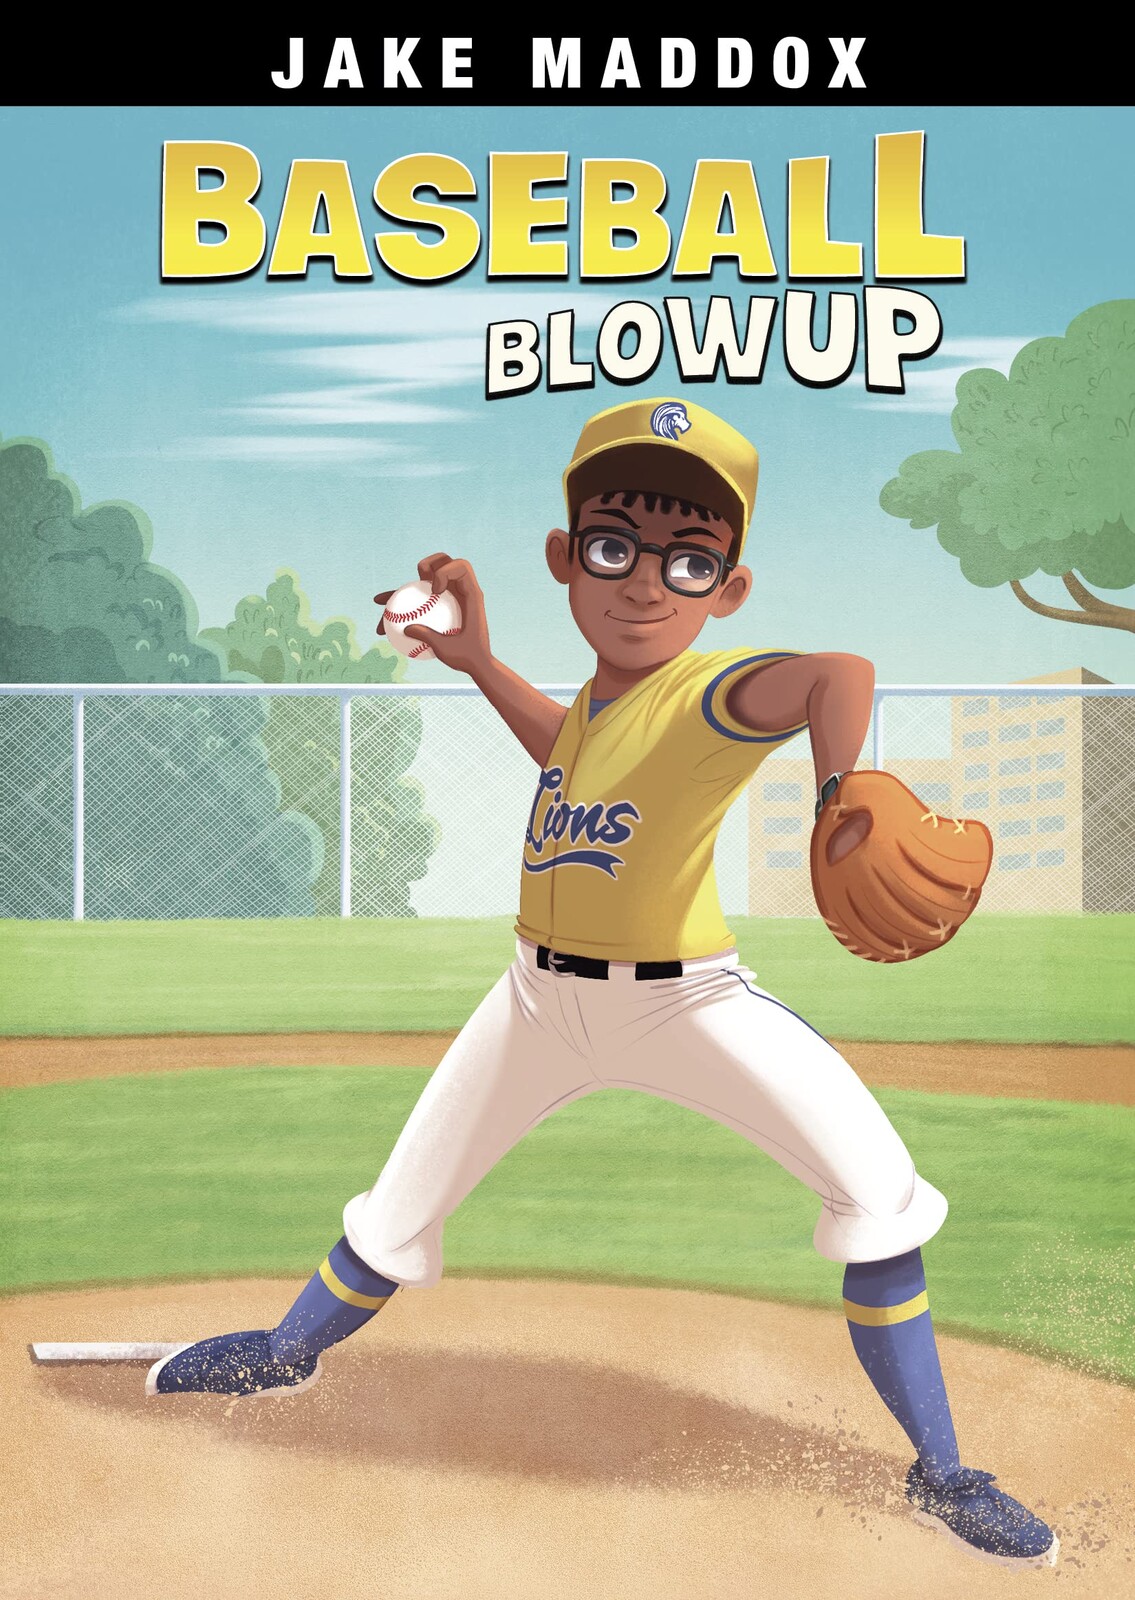 Baseball Blowup (Jake Maddox Sports Stories)
Author:  Jake Maddox
Illustrator: Eva Morales
Publisher: ©Capstone (2023)
Languaje: English
ISBN: 978-1669007234